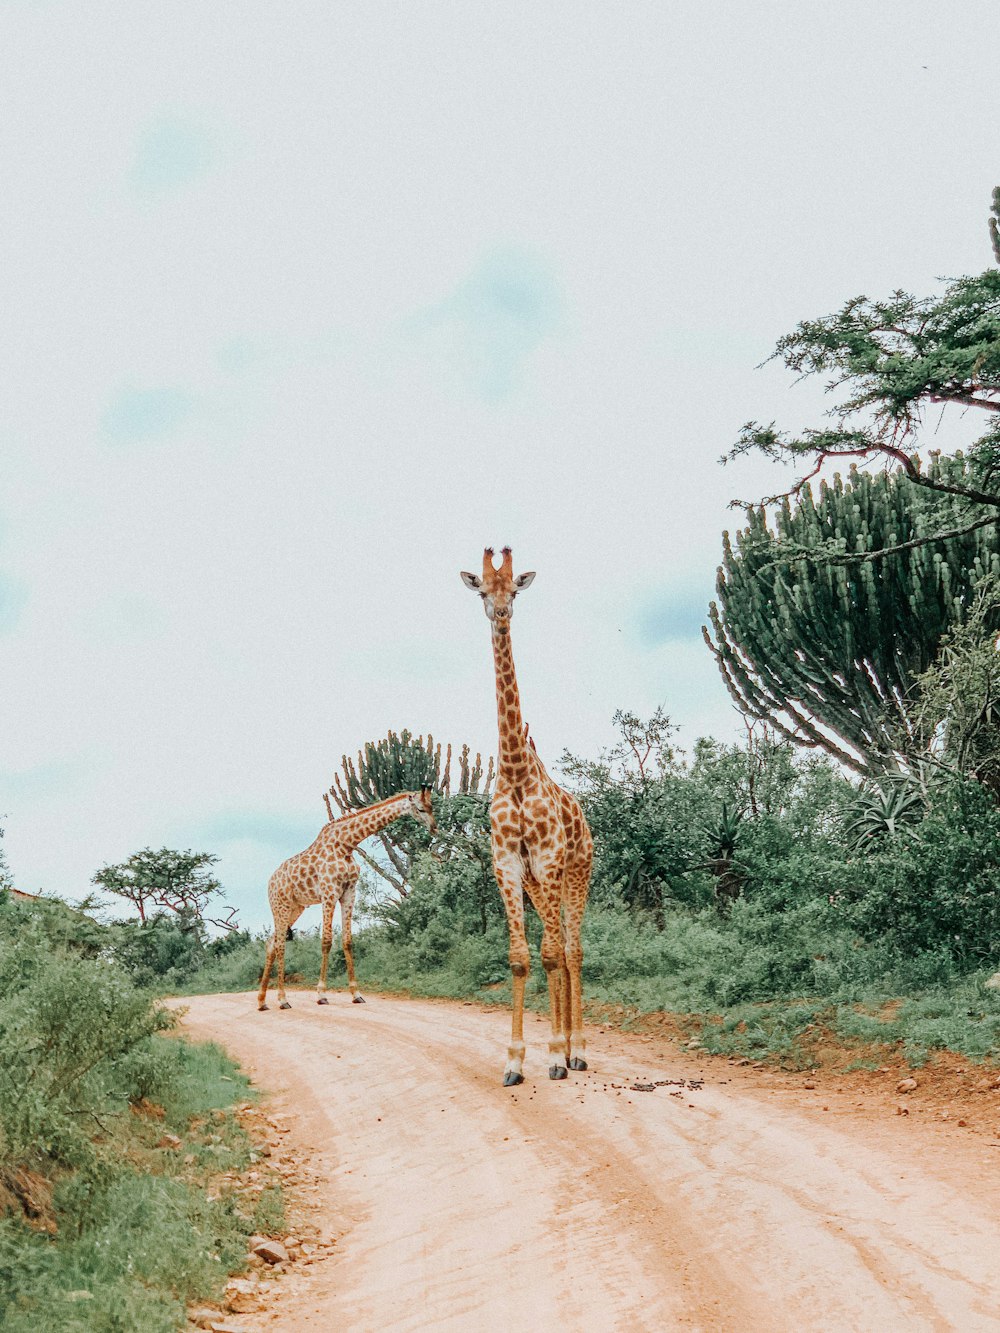 giraffe standing on brown dirt road during daytime